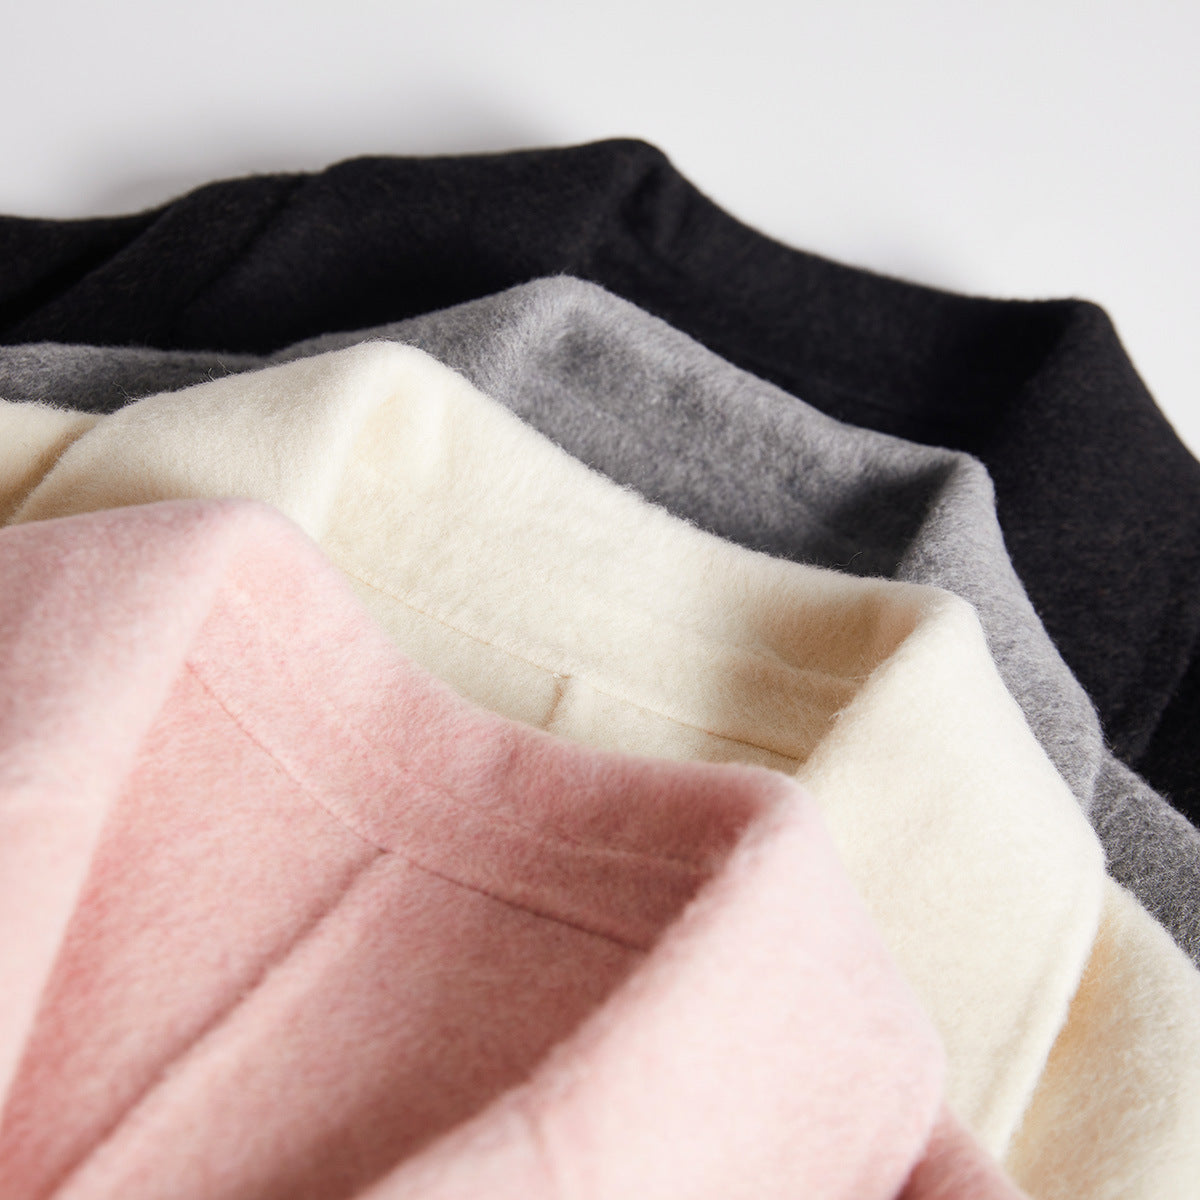 Fashion Women Wool Winter Long Coats-Outerwear-Pink-S-Free Shipping Leatheretro